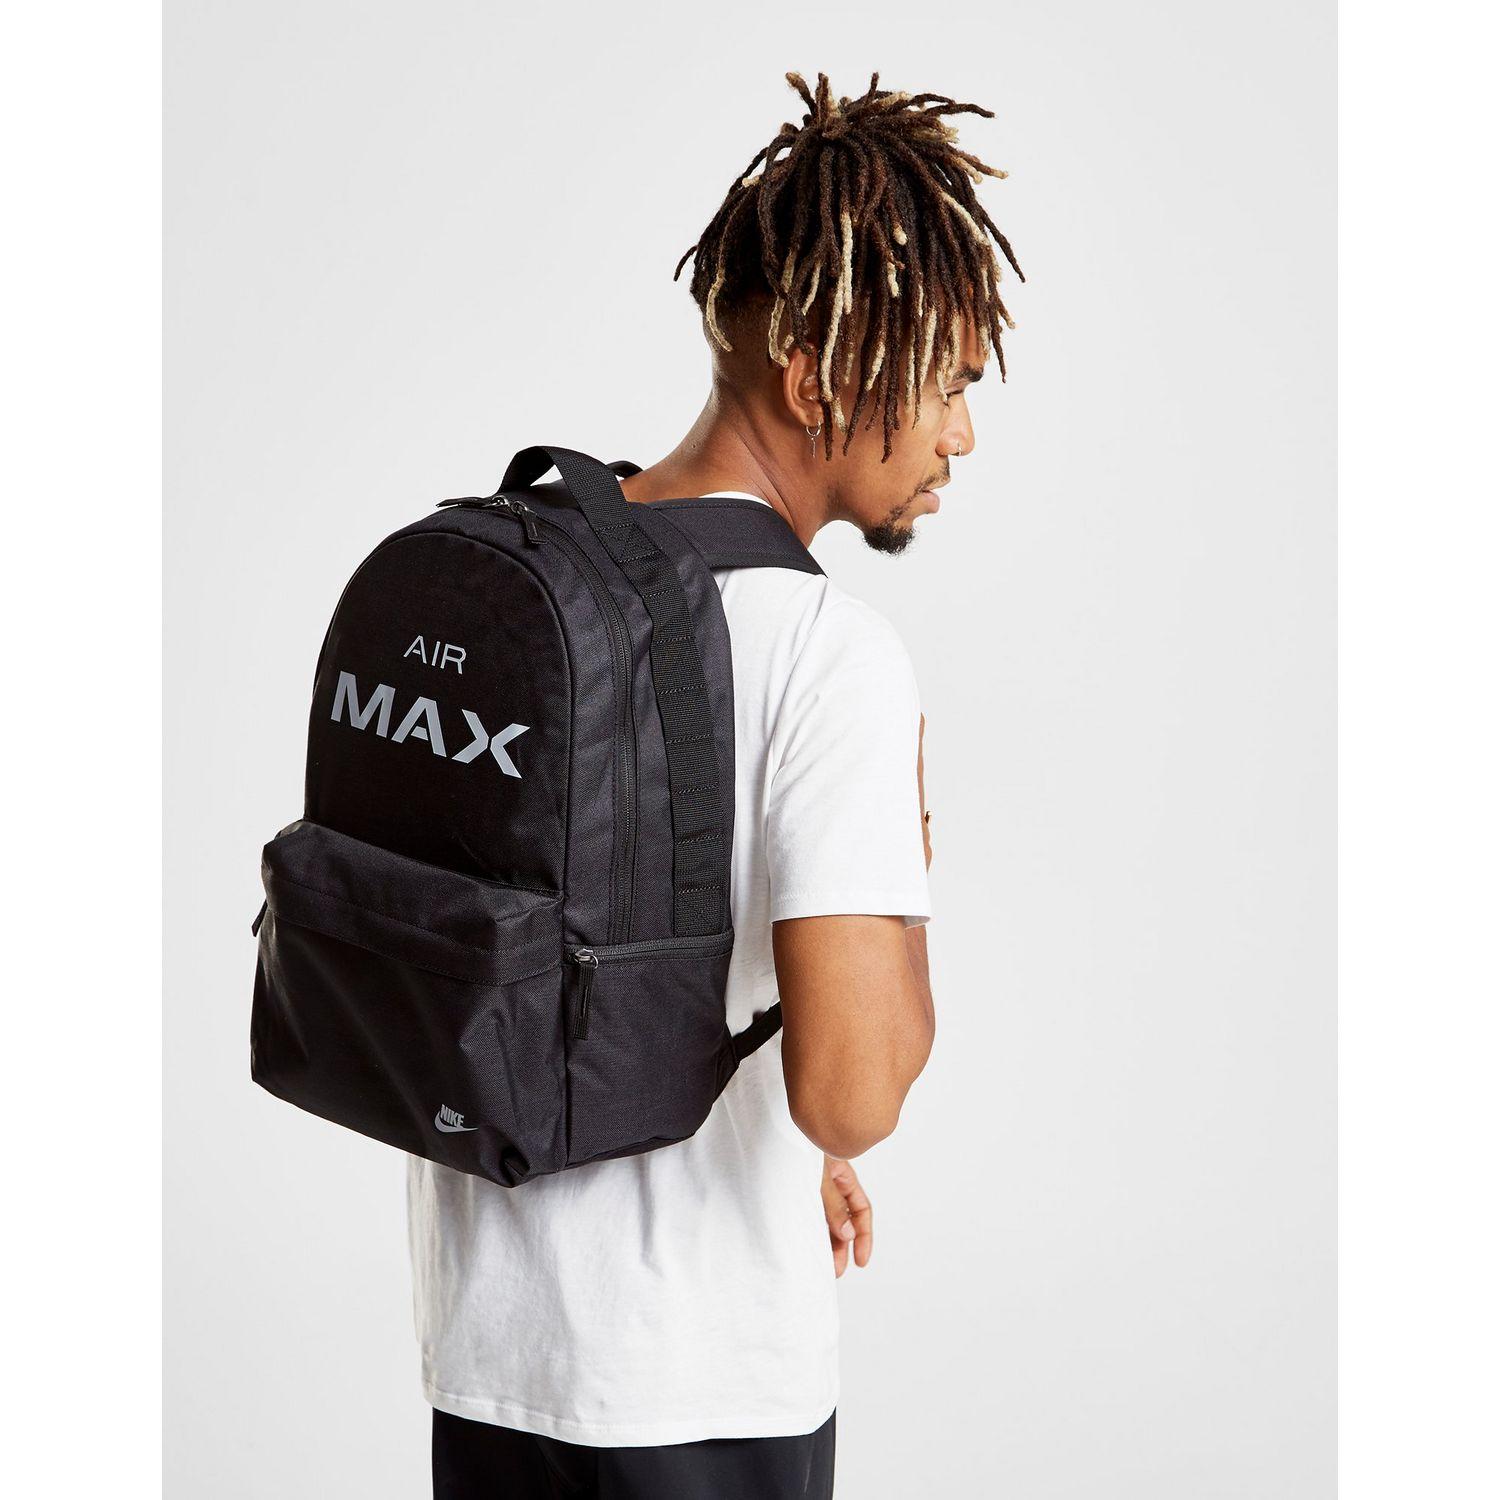 Nike Air Max Backpack in Black/Grey (Black) for Men - Lyst